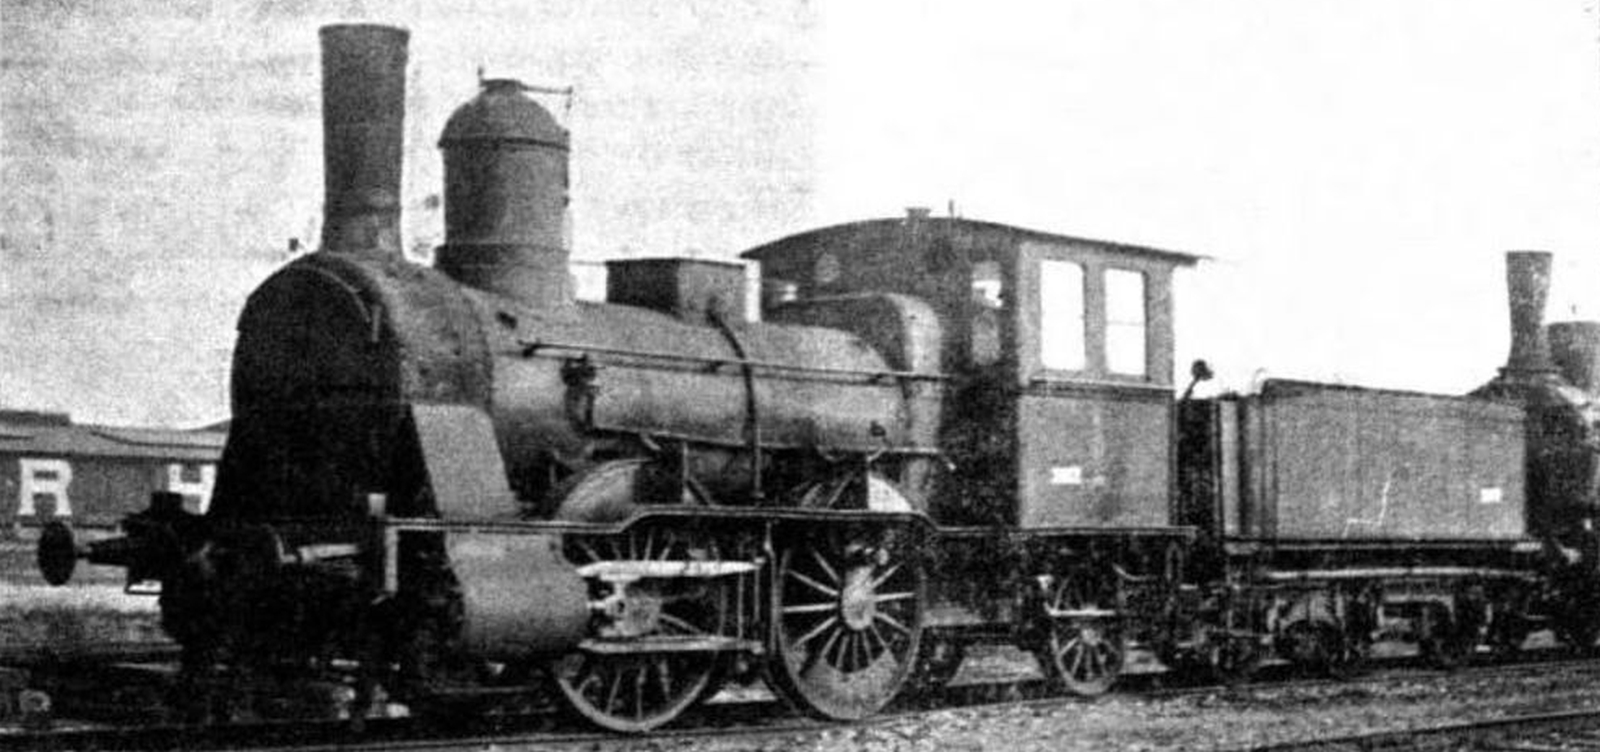 G 2 formerly Berlin-Hamburg Railway Company